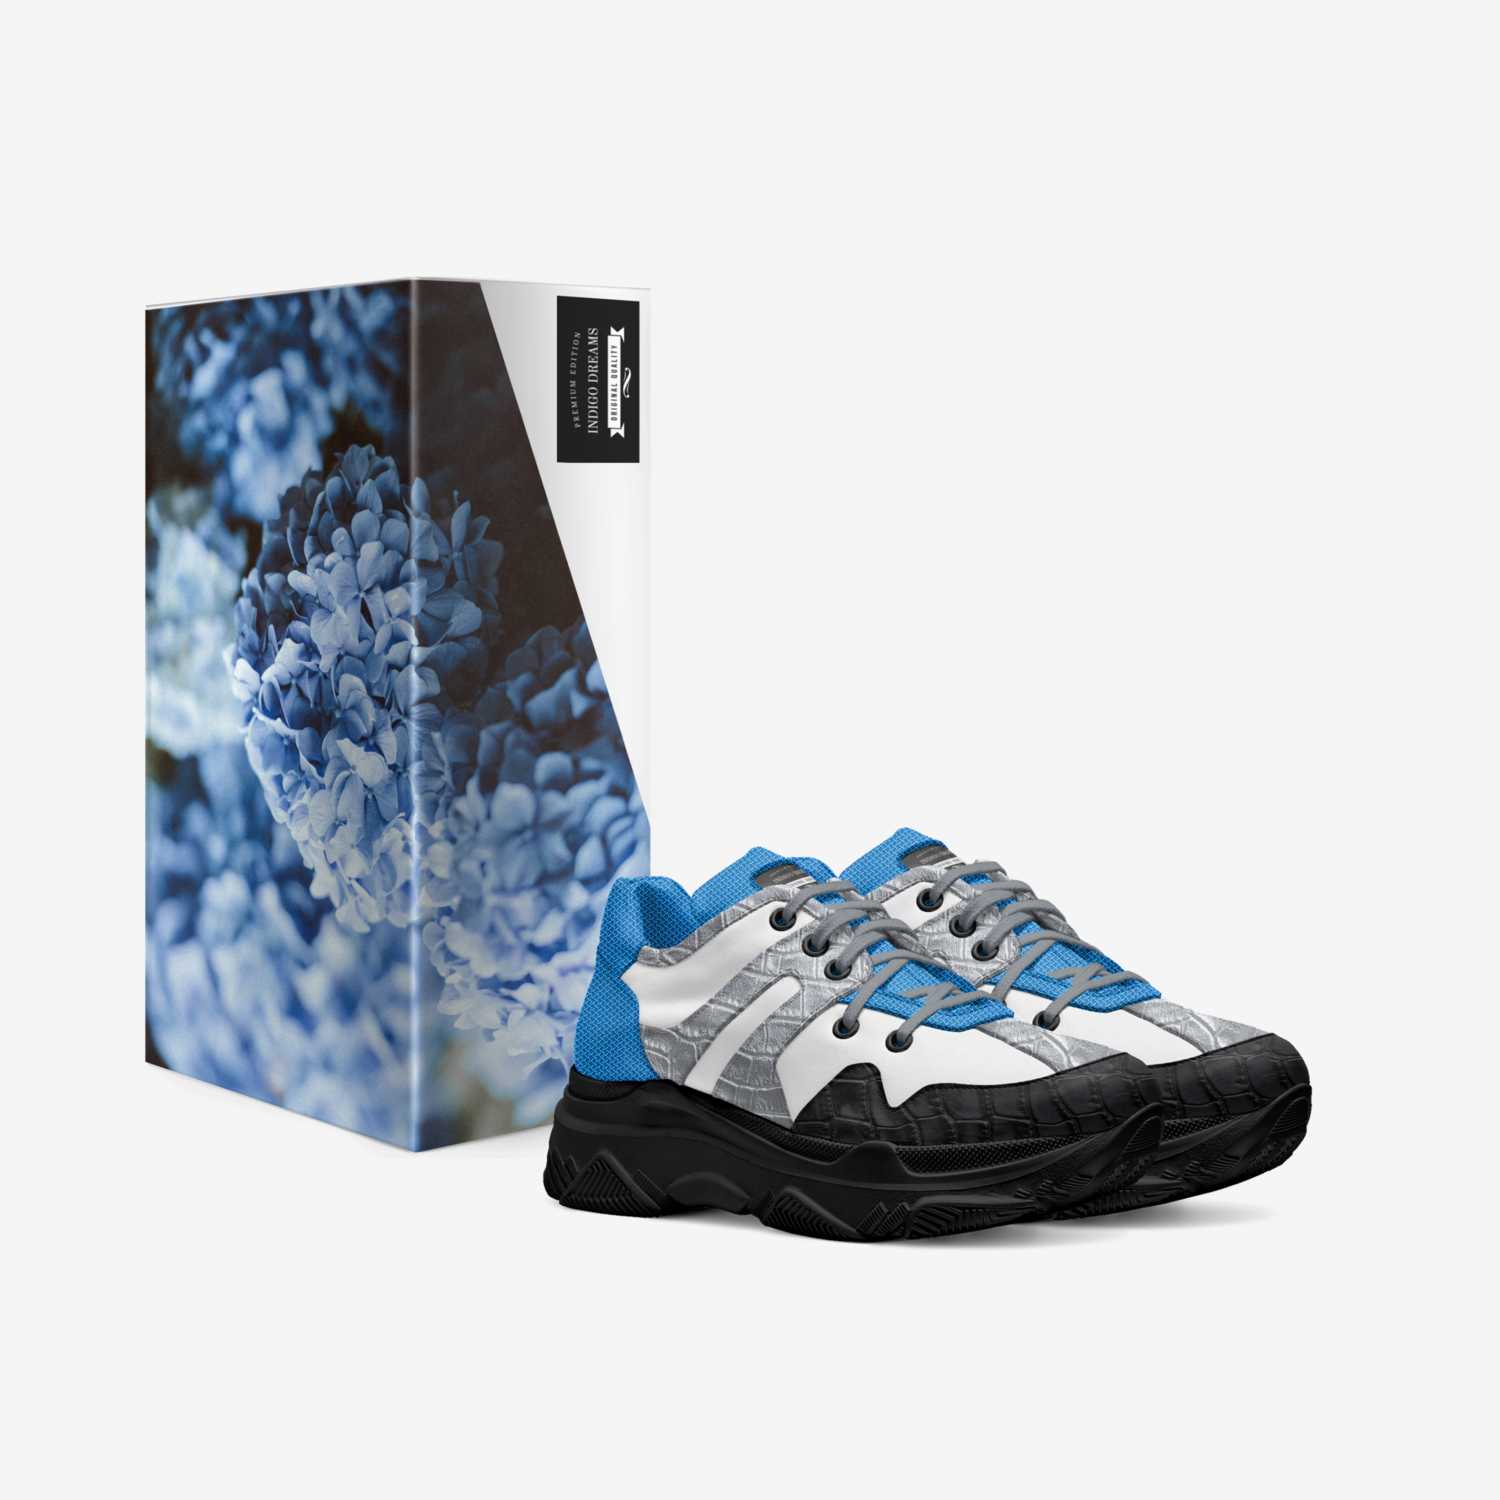 INDIGO DREAMS custom made in Italy shoes by Glacier Cold | Box view